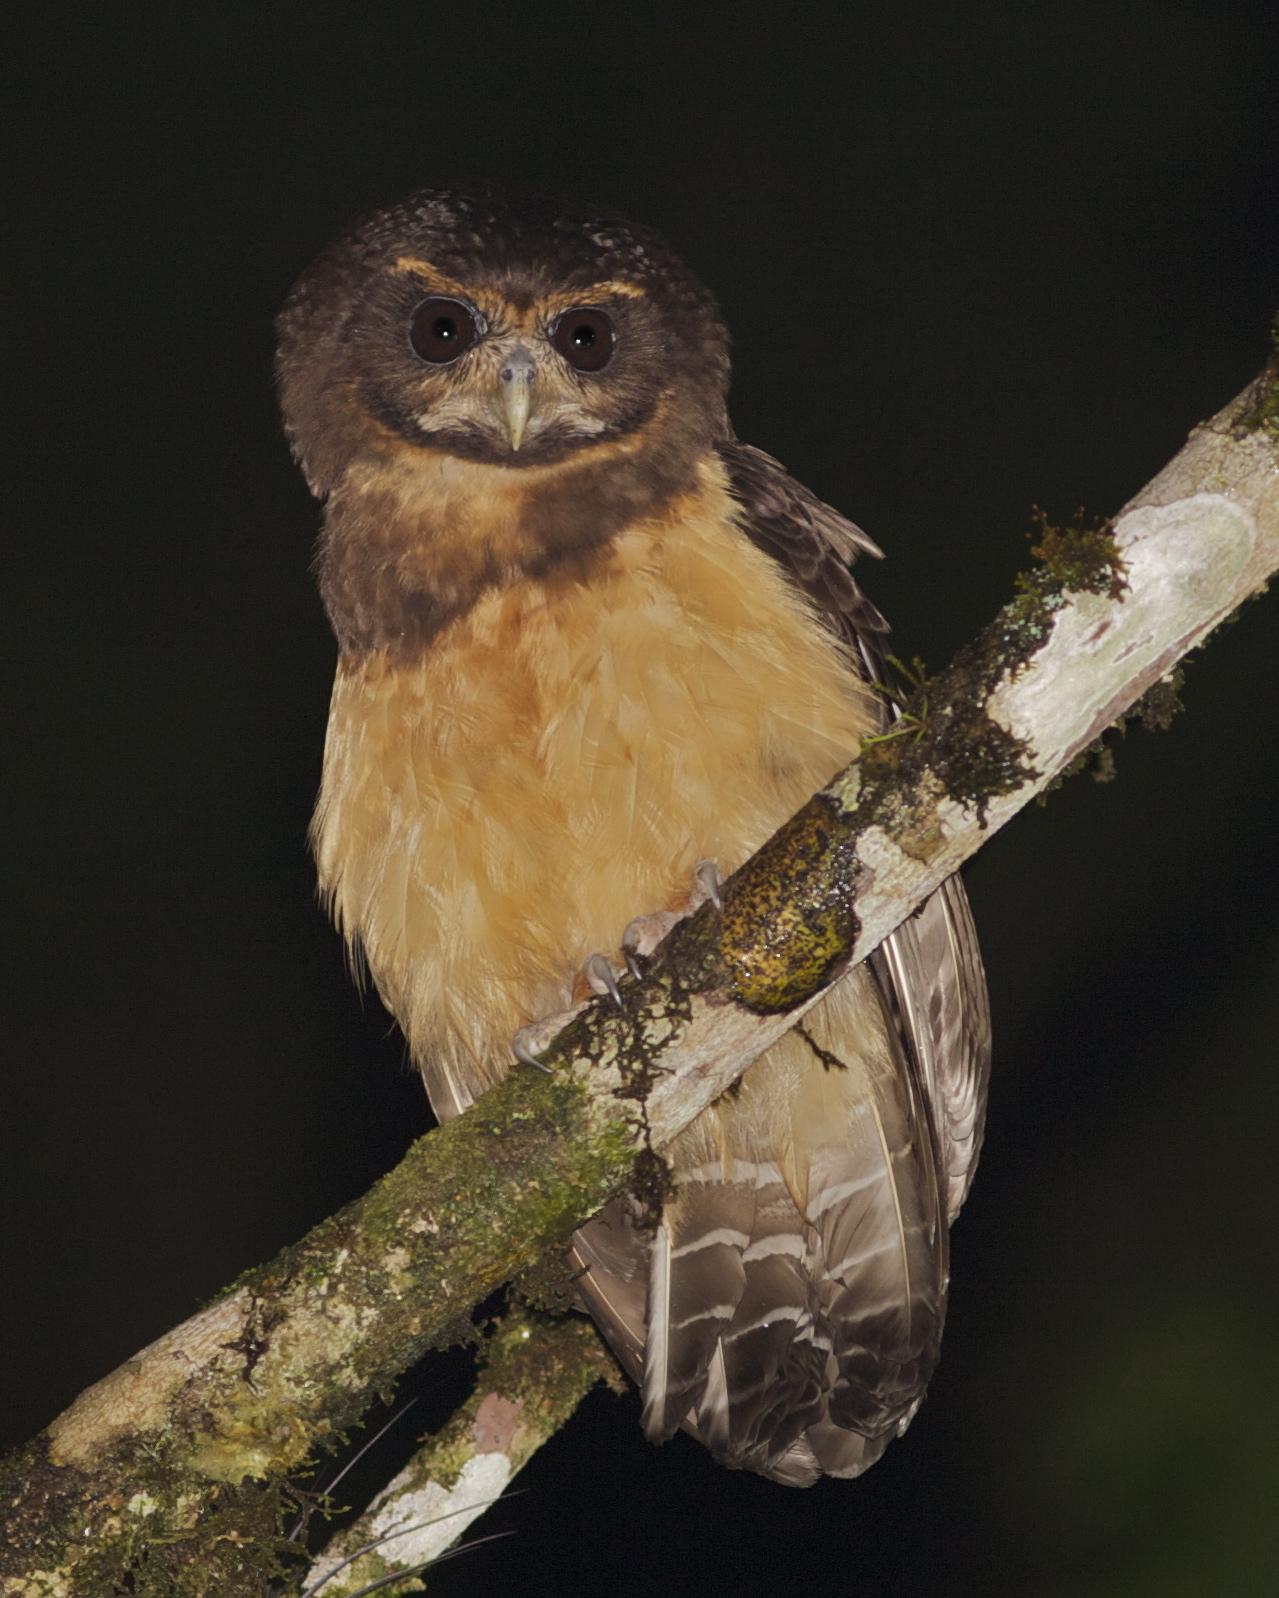 Tawny-browed Owl Photo by Marcelo Padua